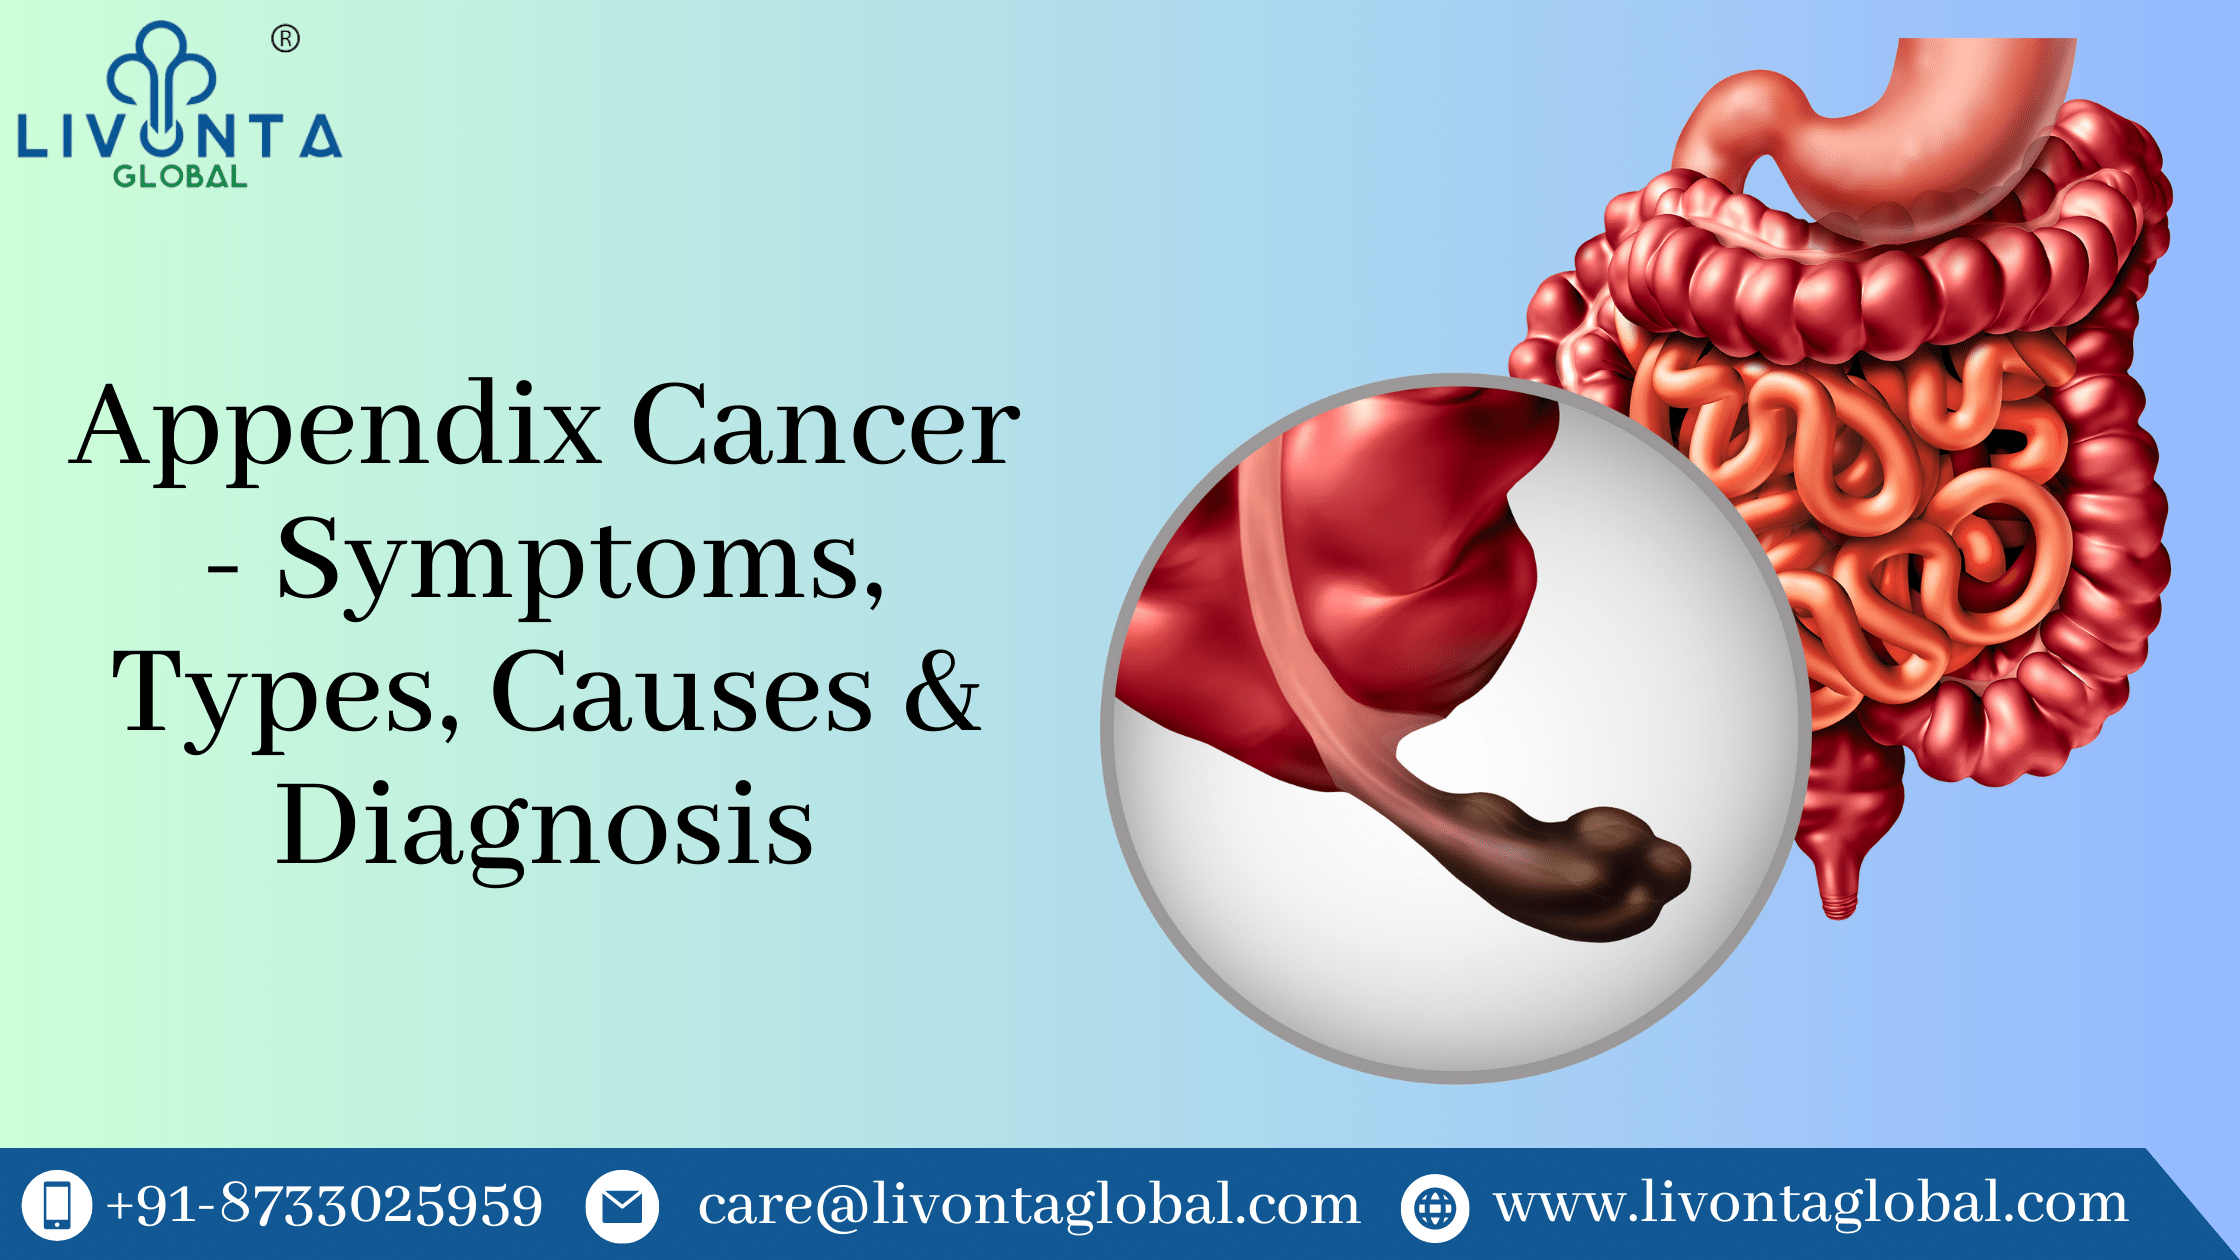 Appendix Cancer - Symptoms, Types, Causes & Diagnosis